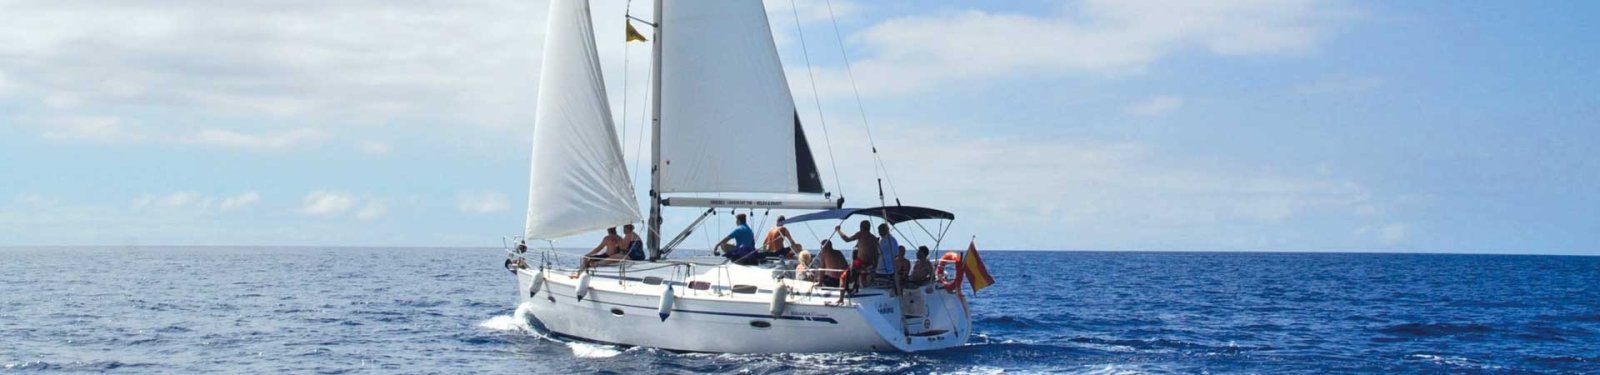 Tenerife sailing charters - Arriro